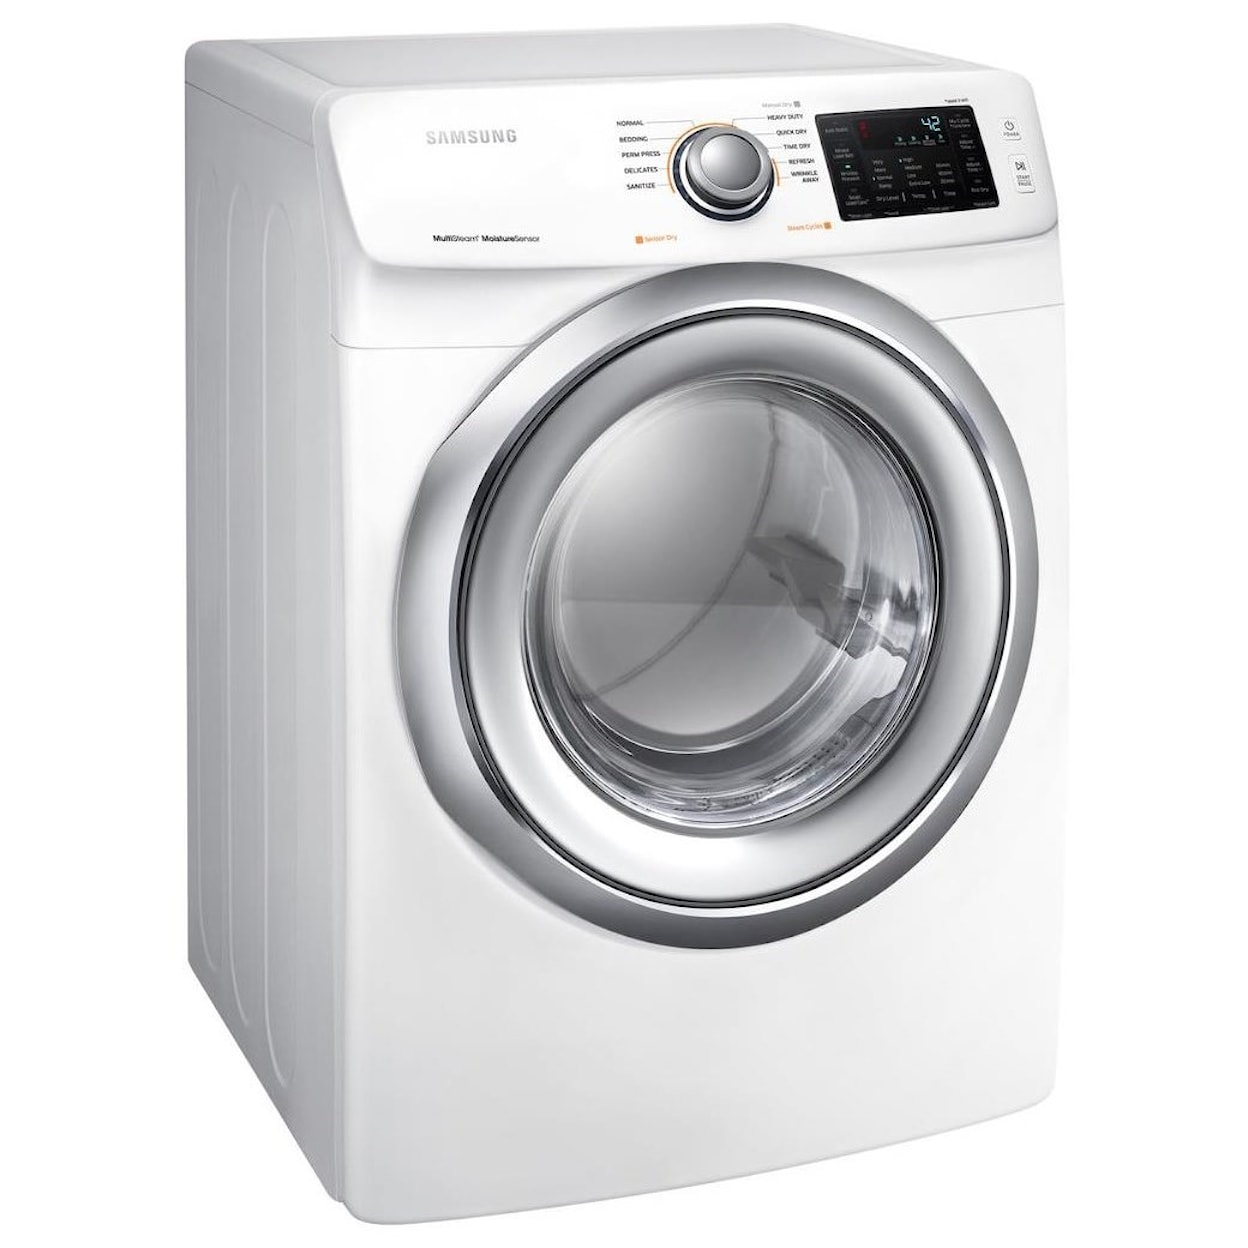 Samsung Appliances Gas Dryers - Samsung DV5300 7.5 Gas Front Load Dryer